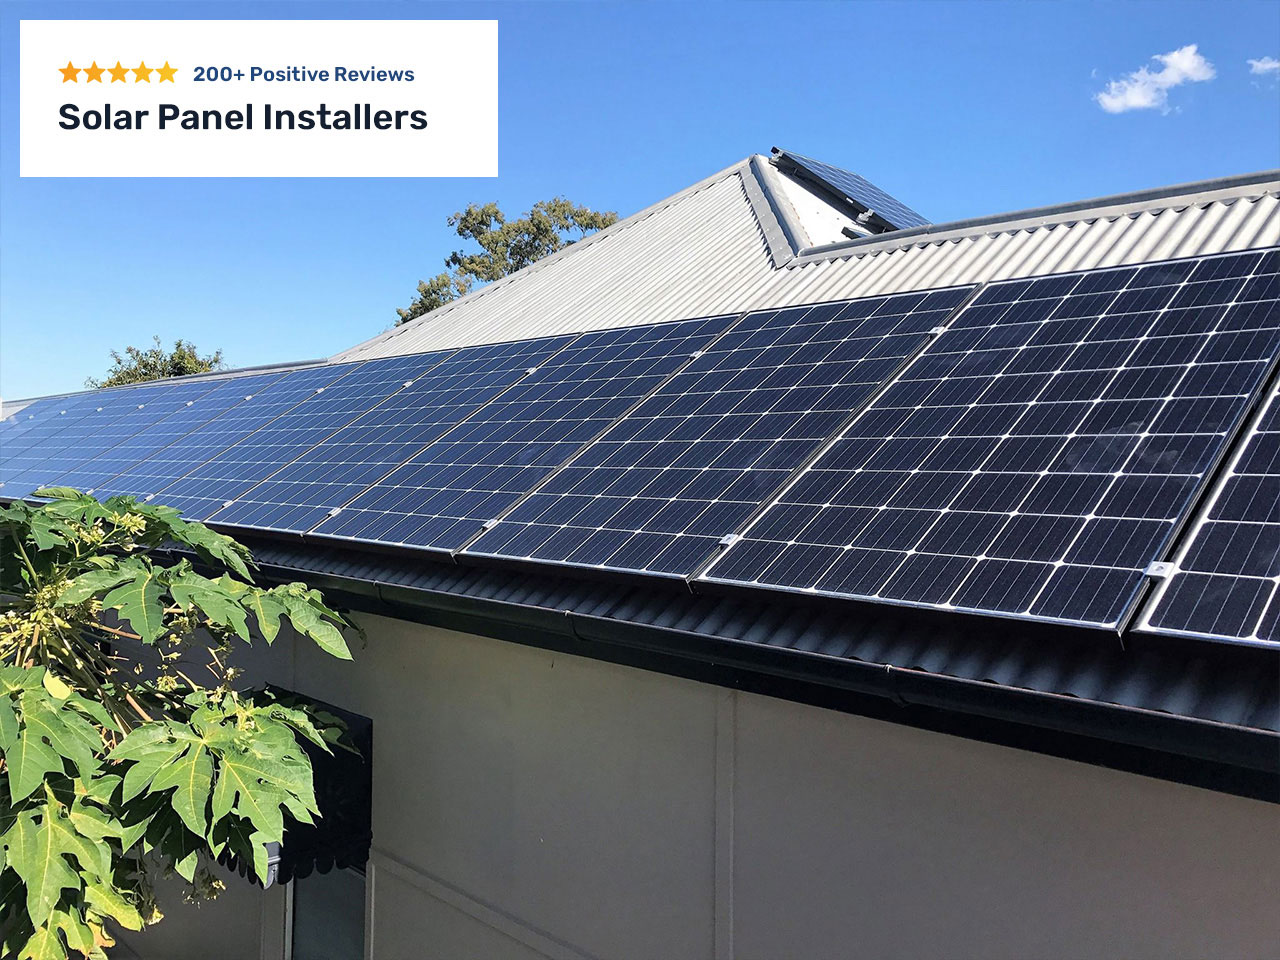 Solareze residential solar pannelinstallers